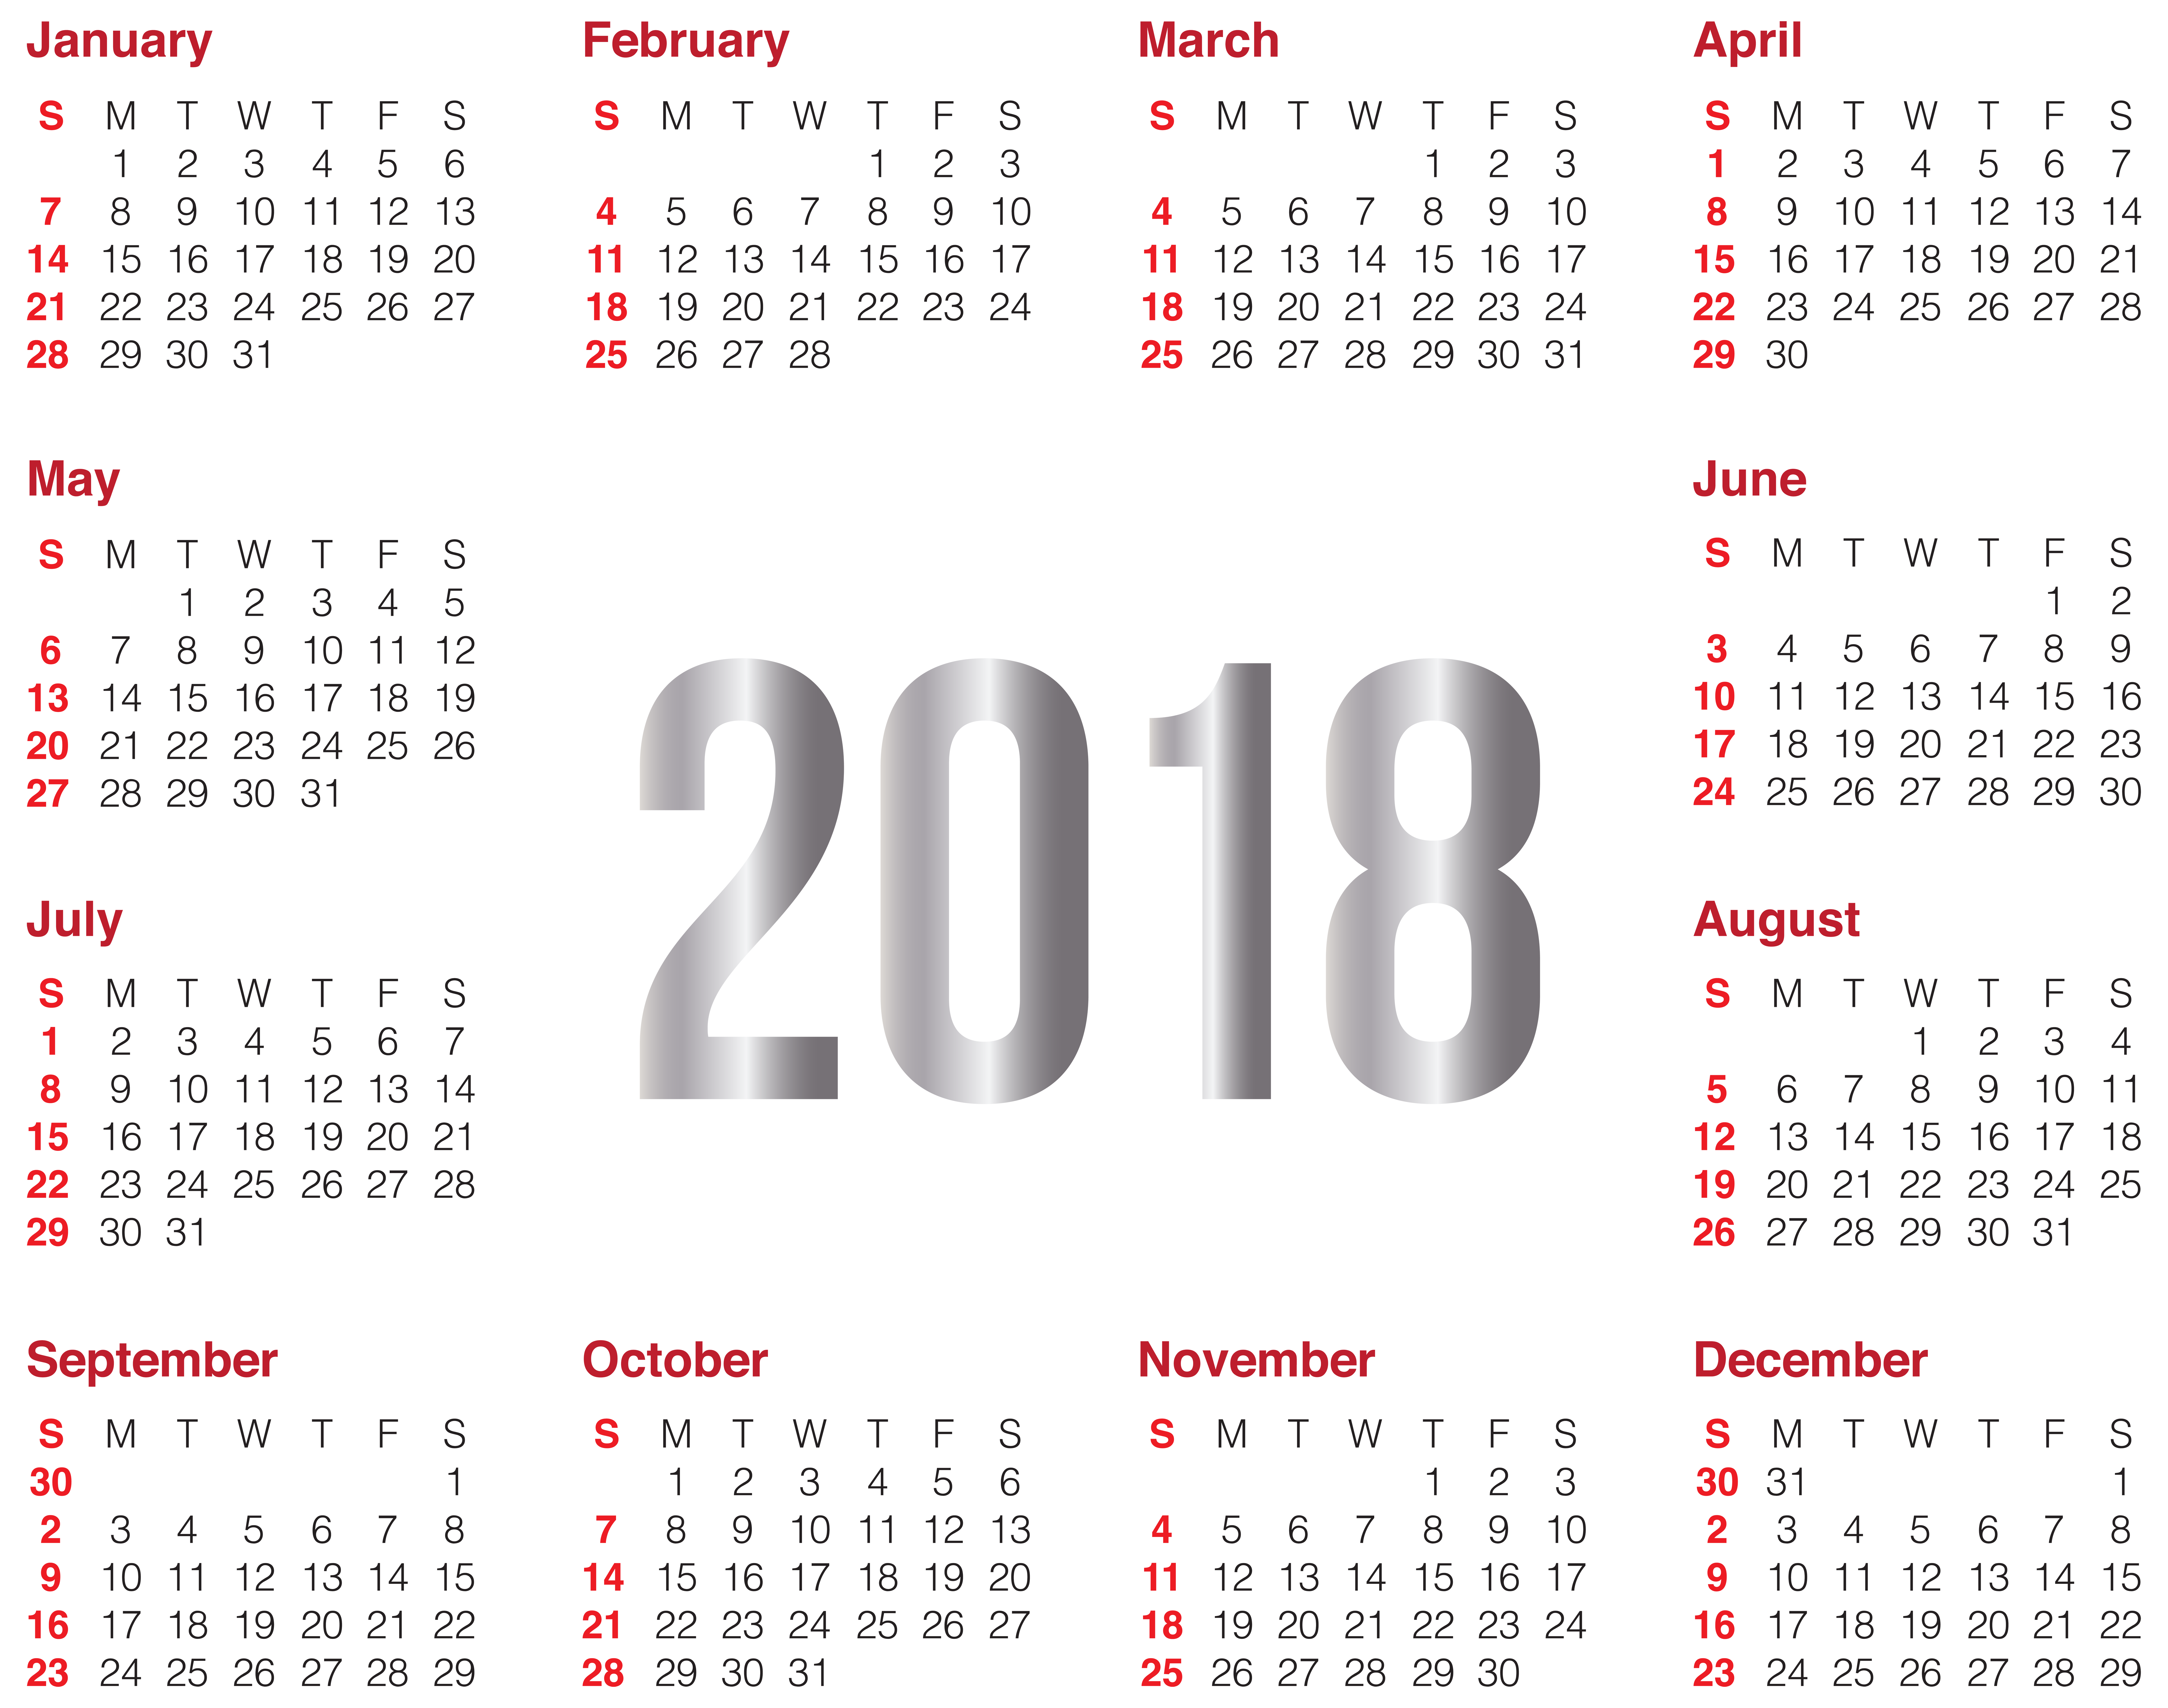 2018 Transparent Calendar PNG Clip Art Image.